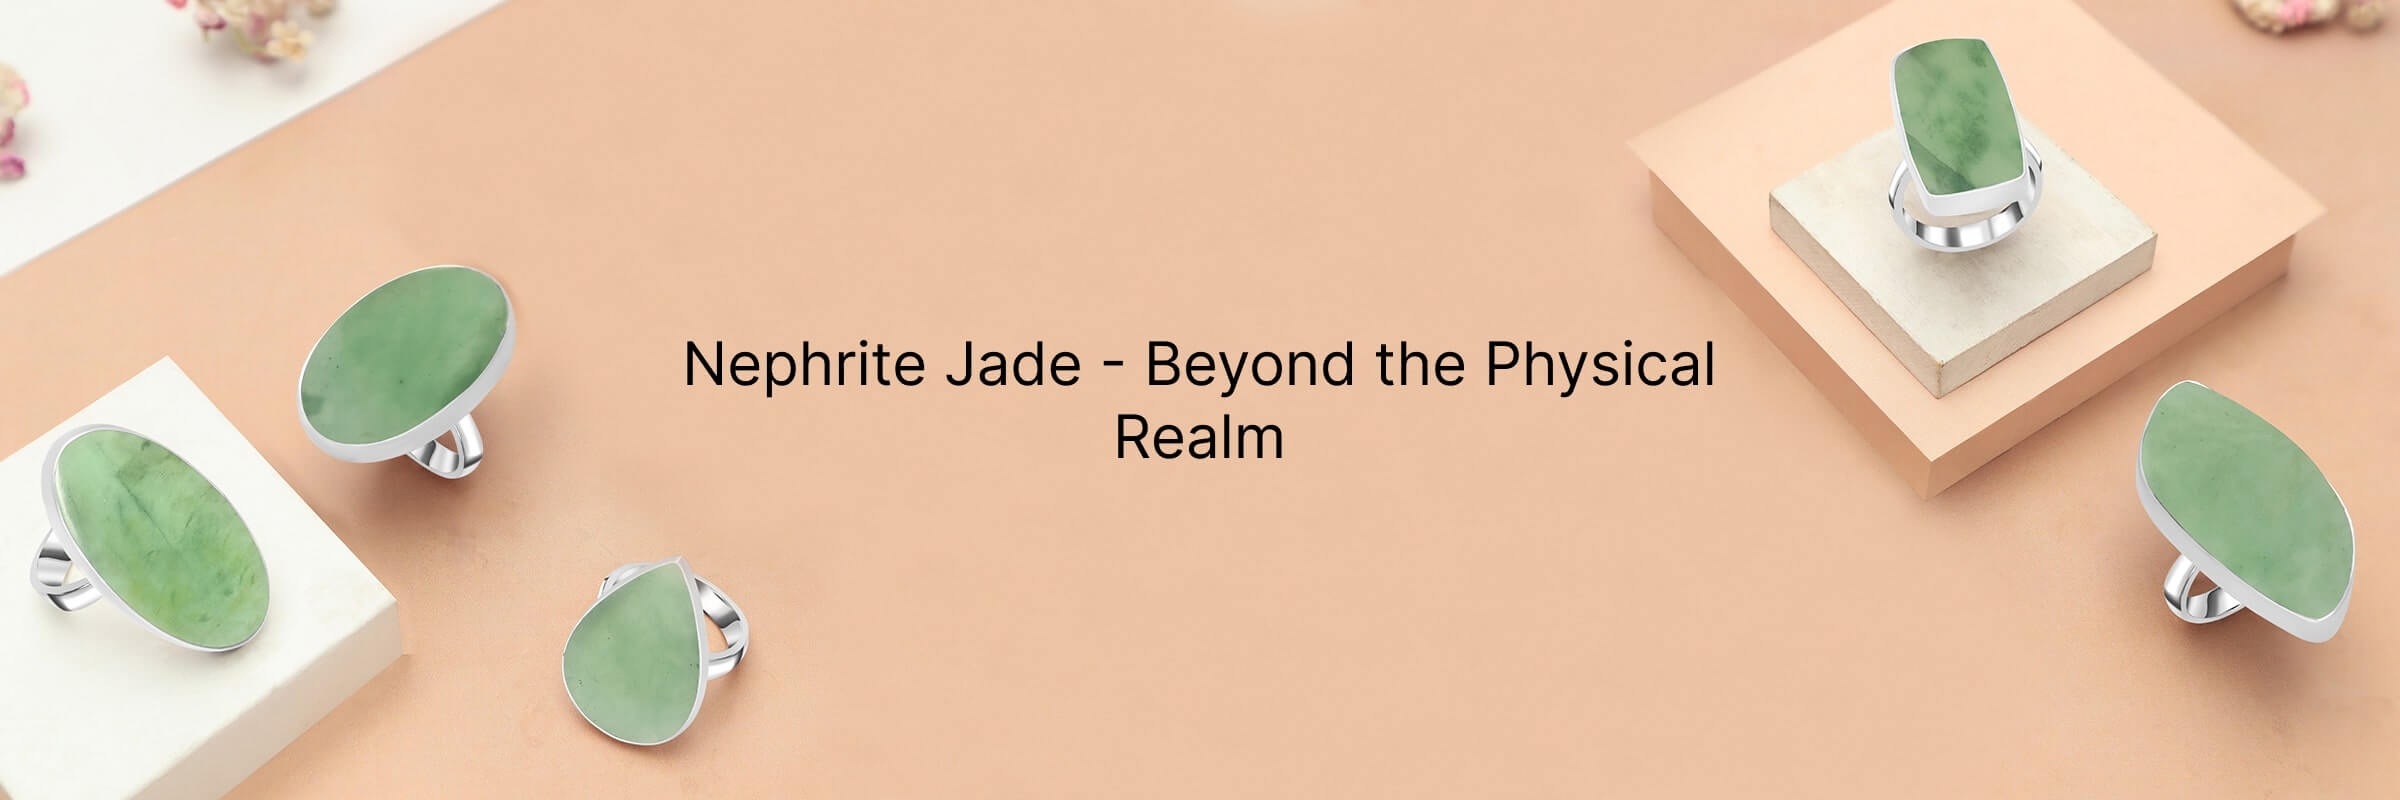 Nephrite Jade Metaphysical Properties